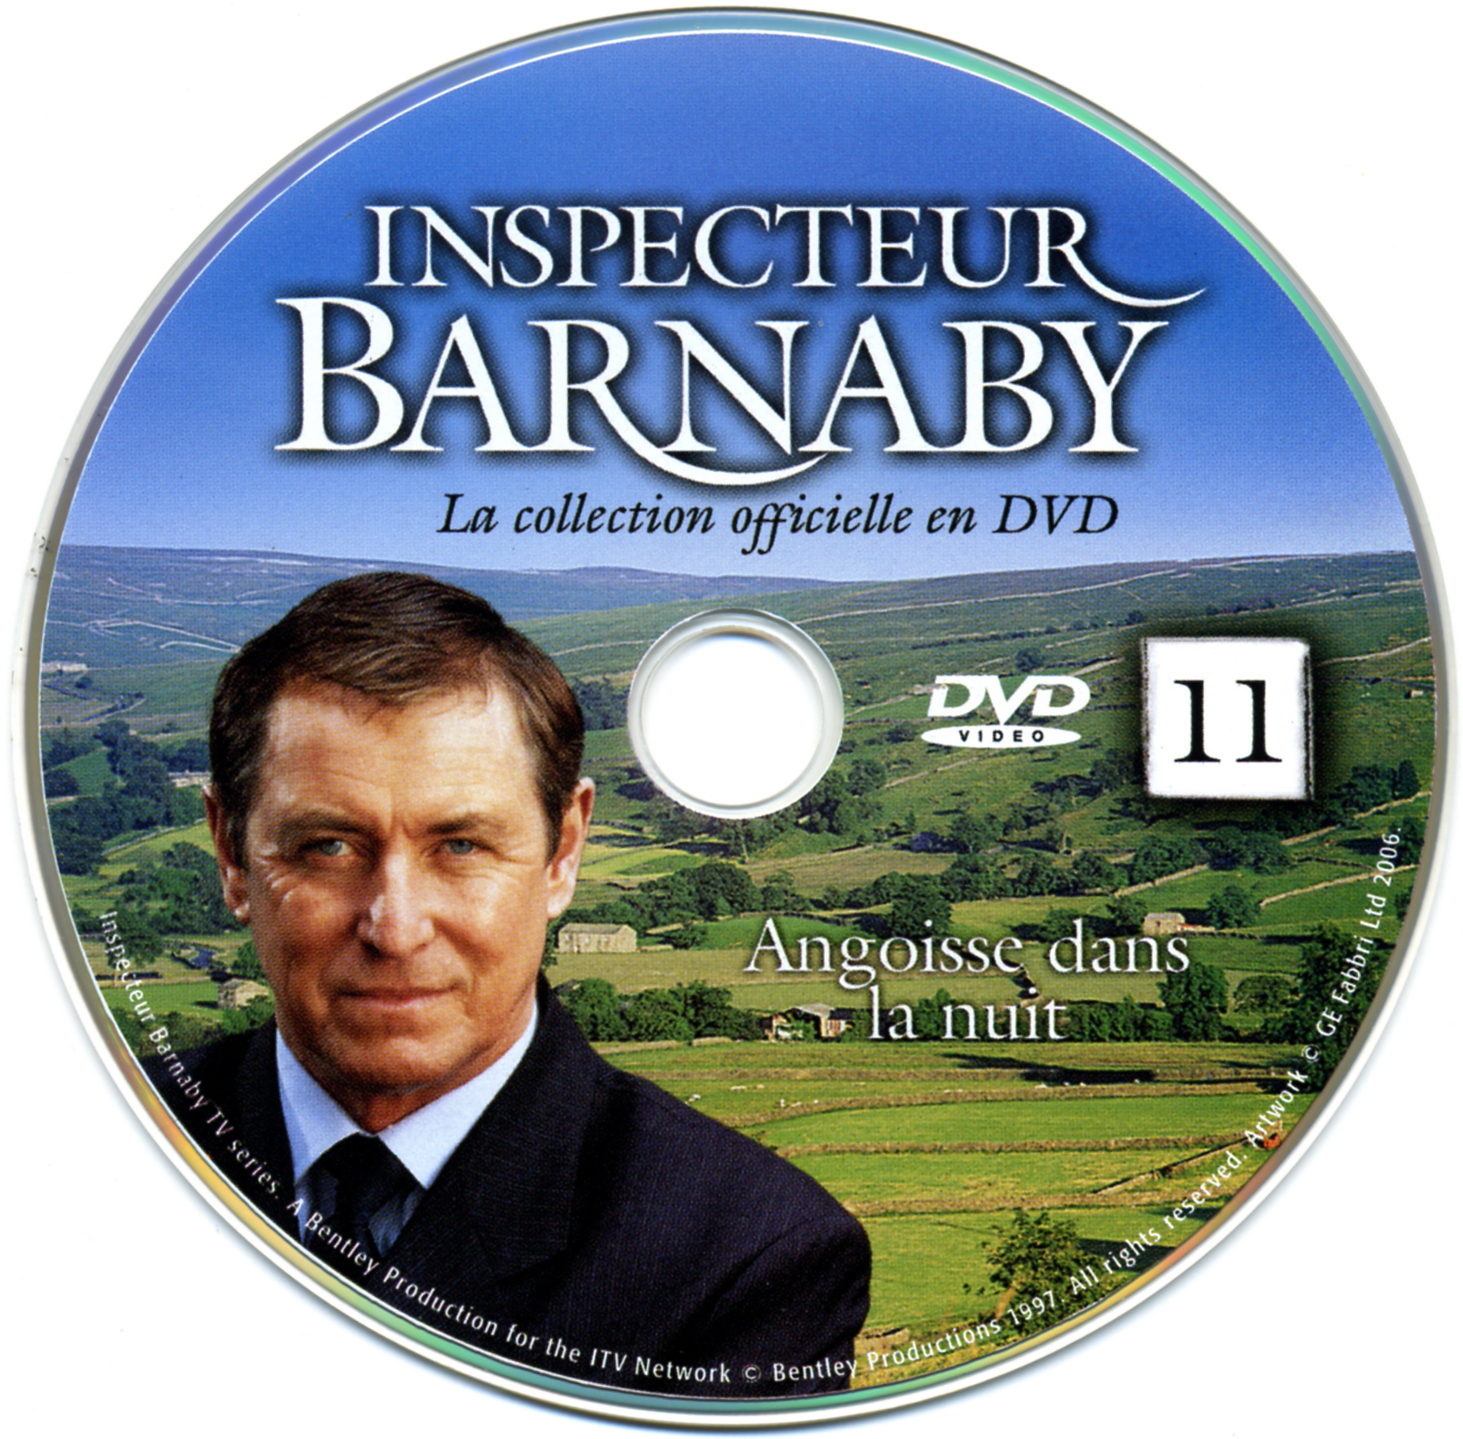 Barnaby vol 11 - Angoisse dans la nuit